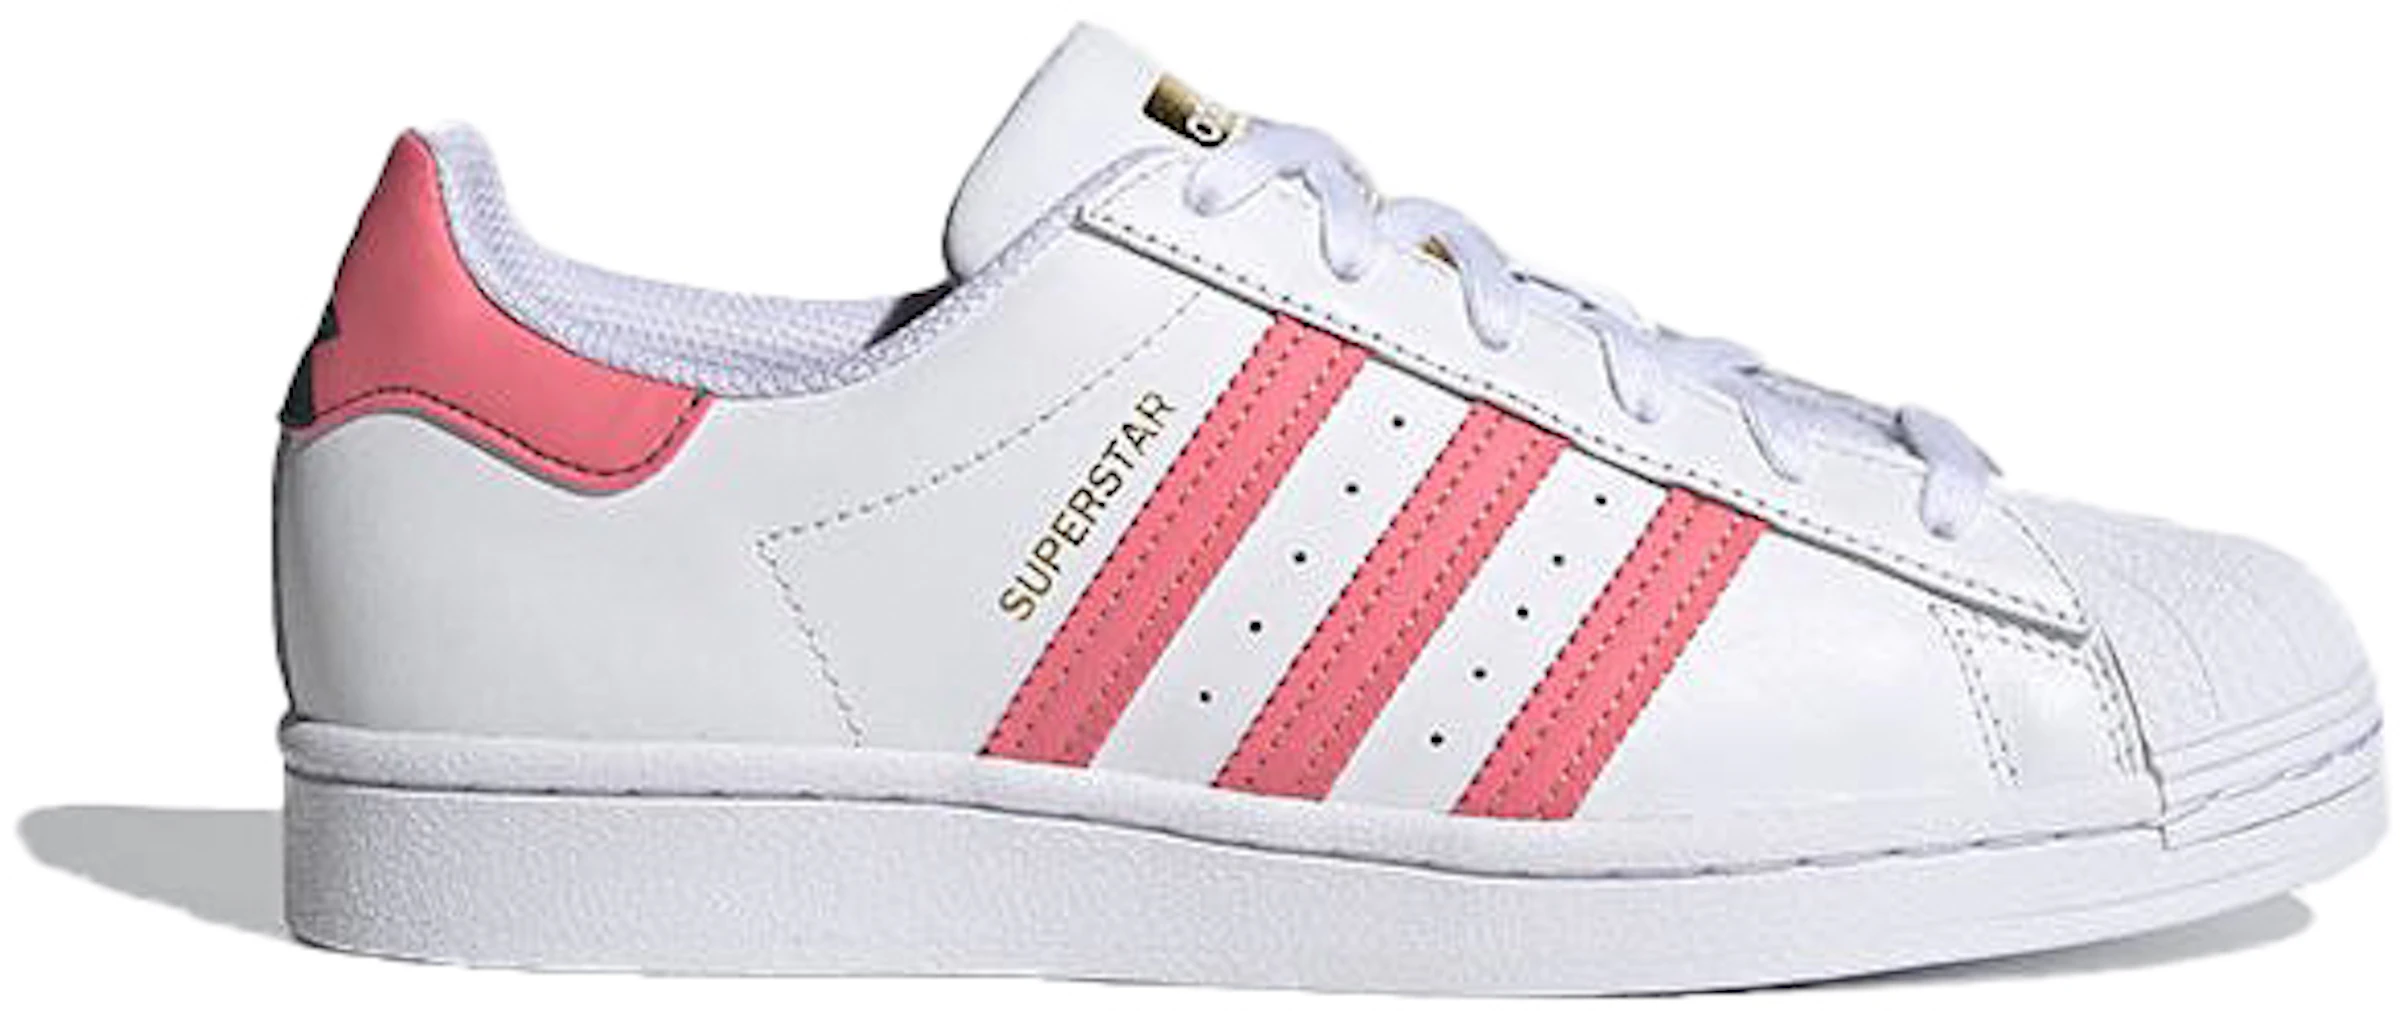 Rechthoek Verlammen zand adidas Superstar White Pink (Women's) - FX5964 - US